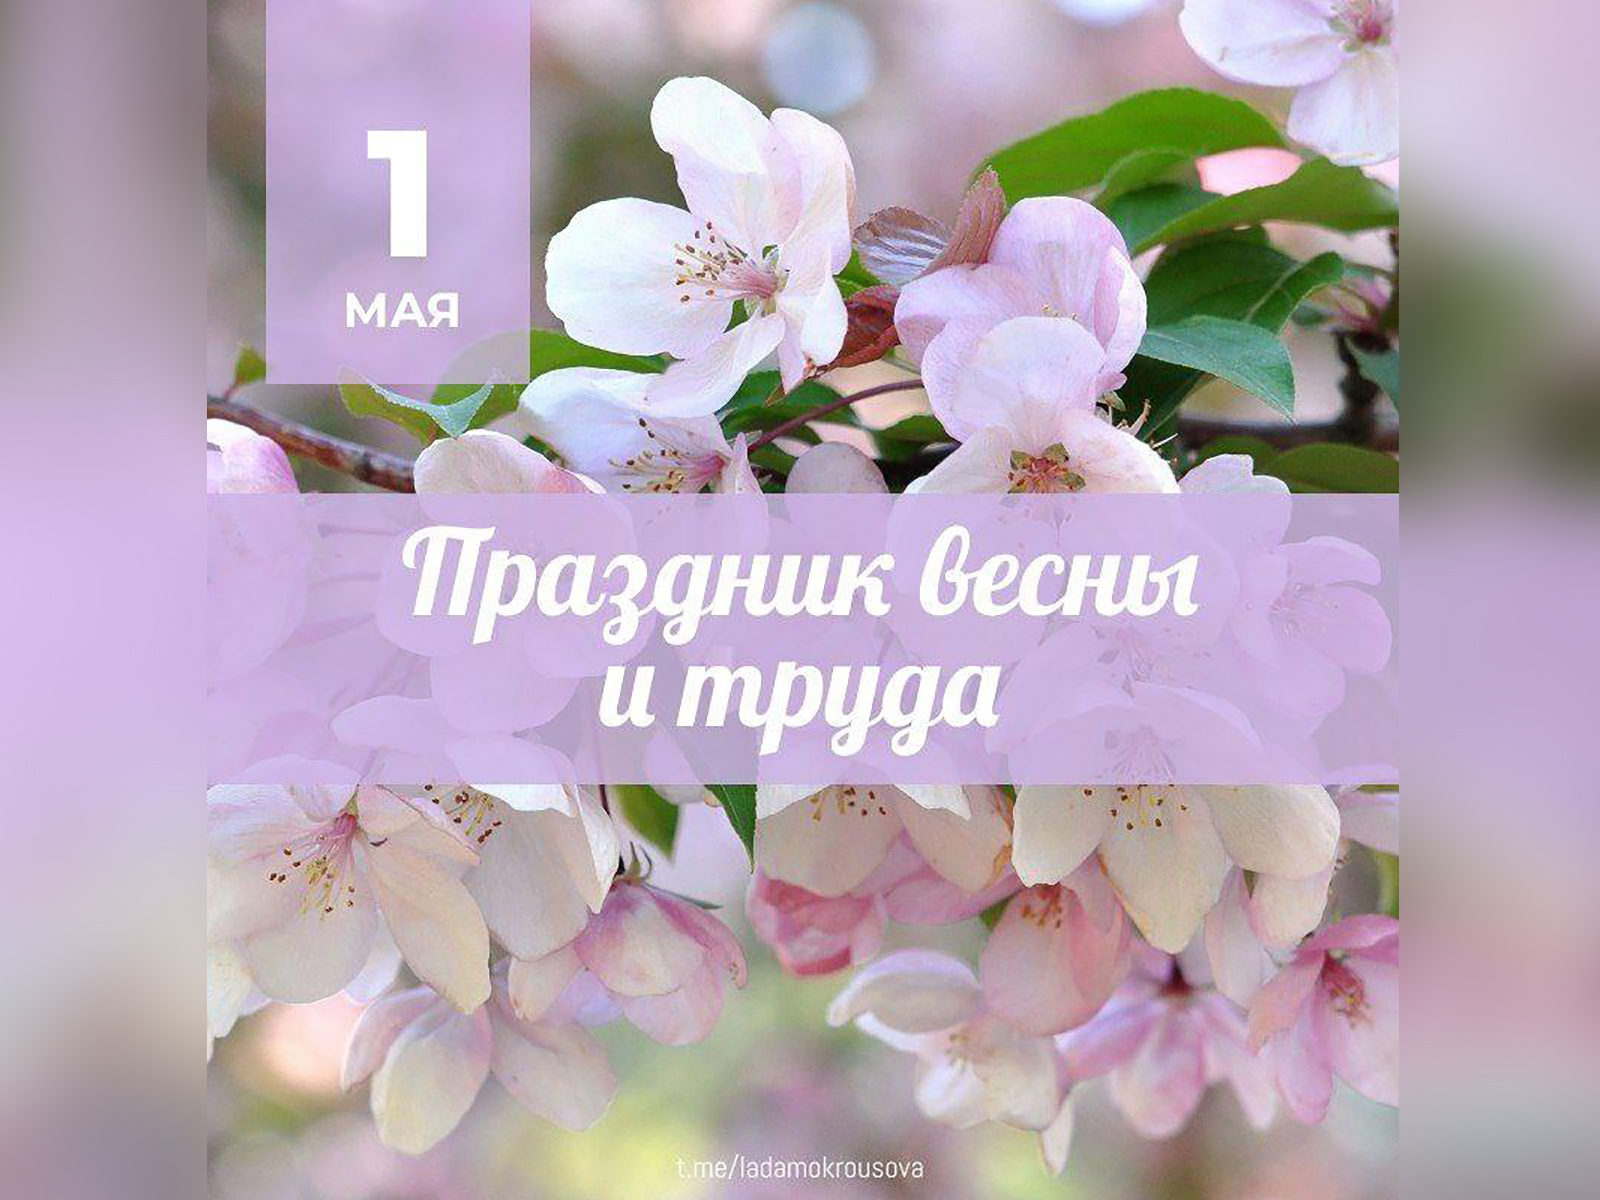 Глава города Лада Мокроусова поздравила саратовцев с Праздником весны и труда.